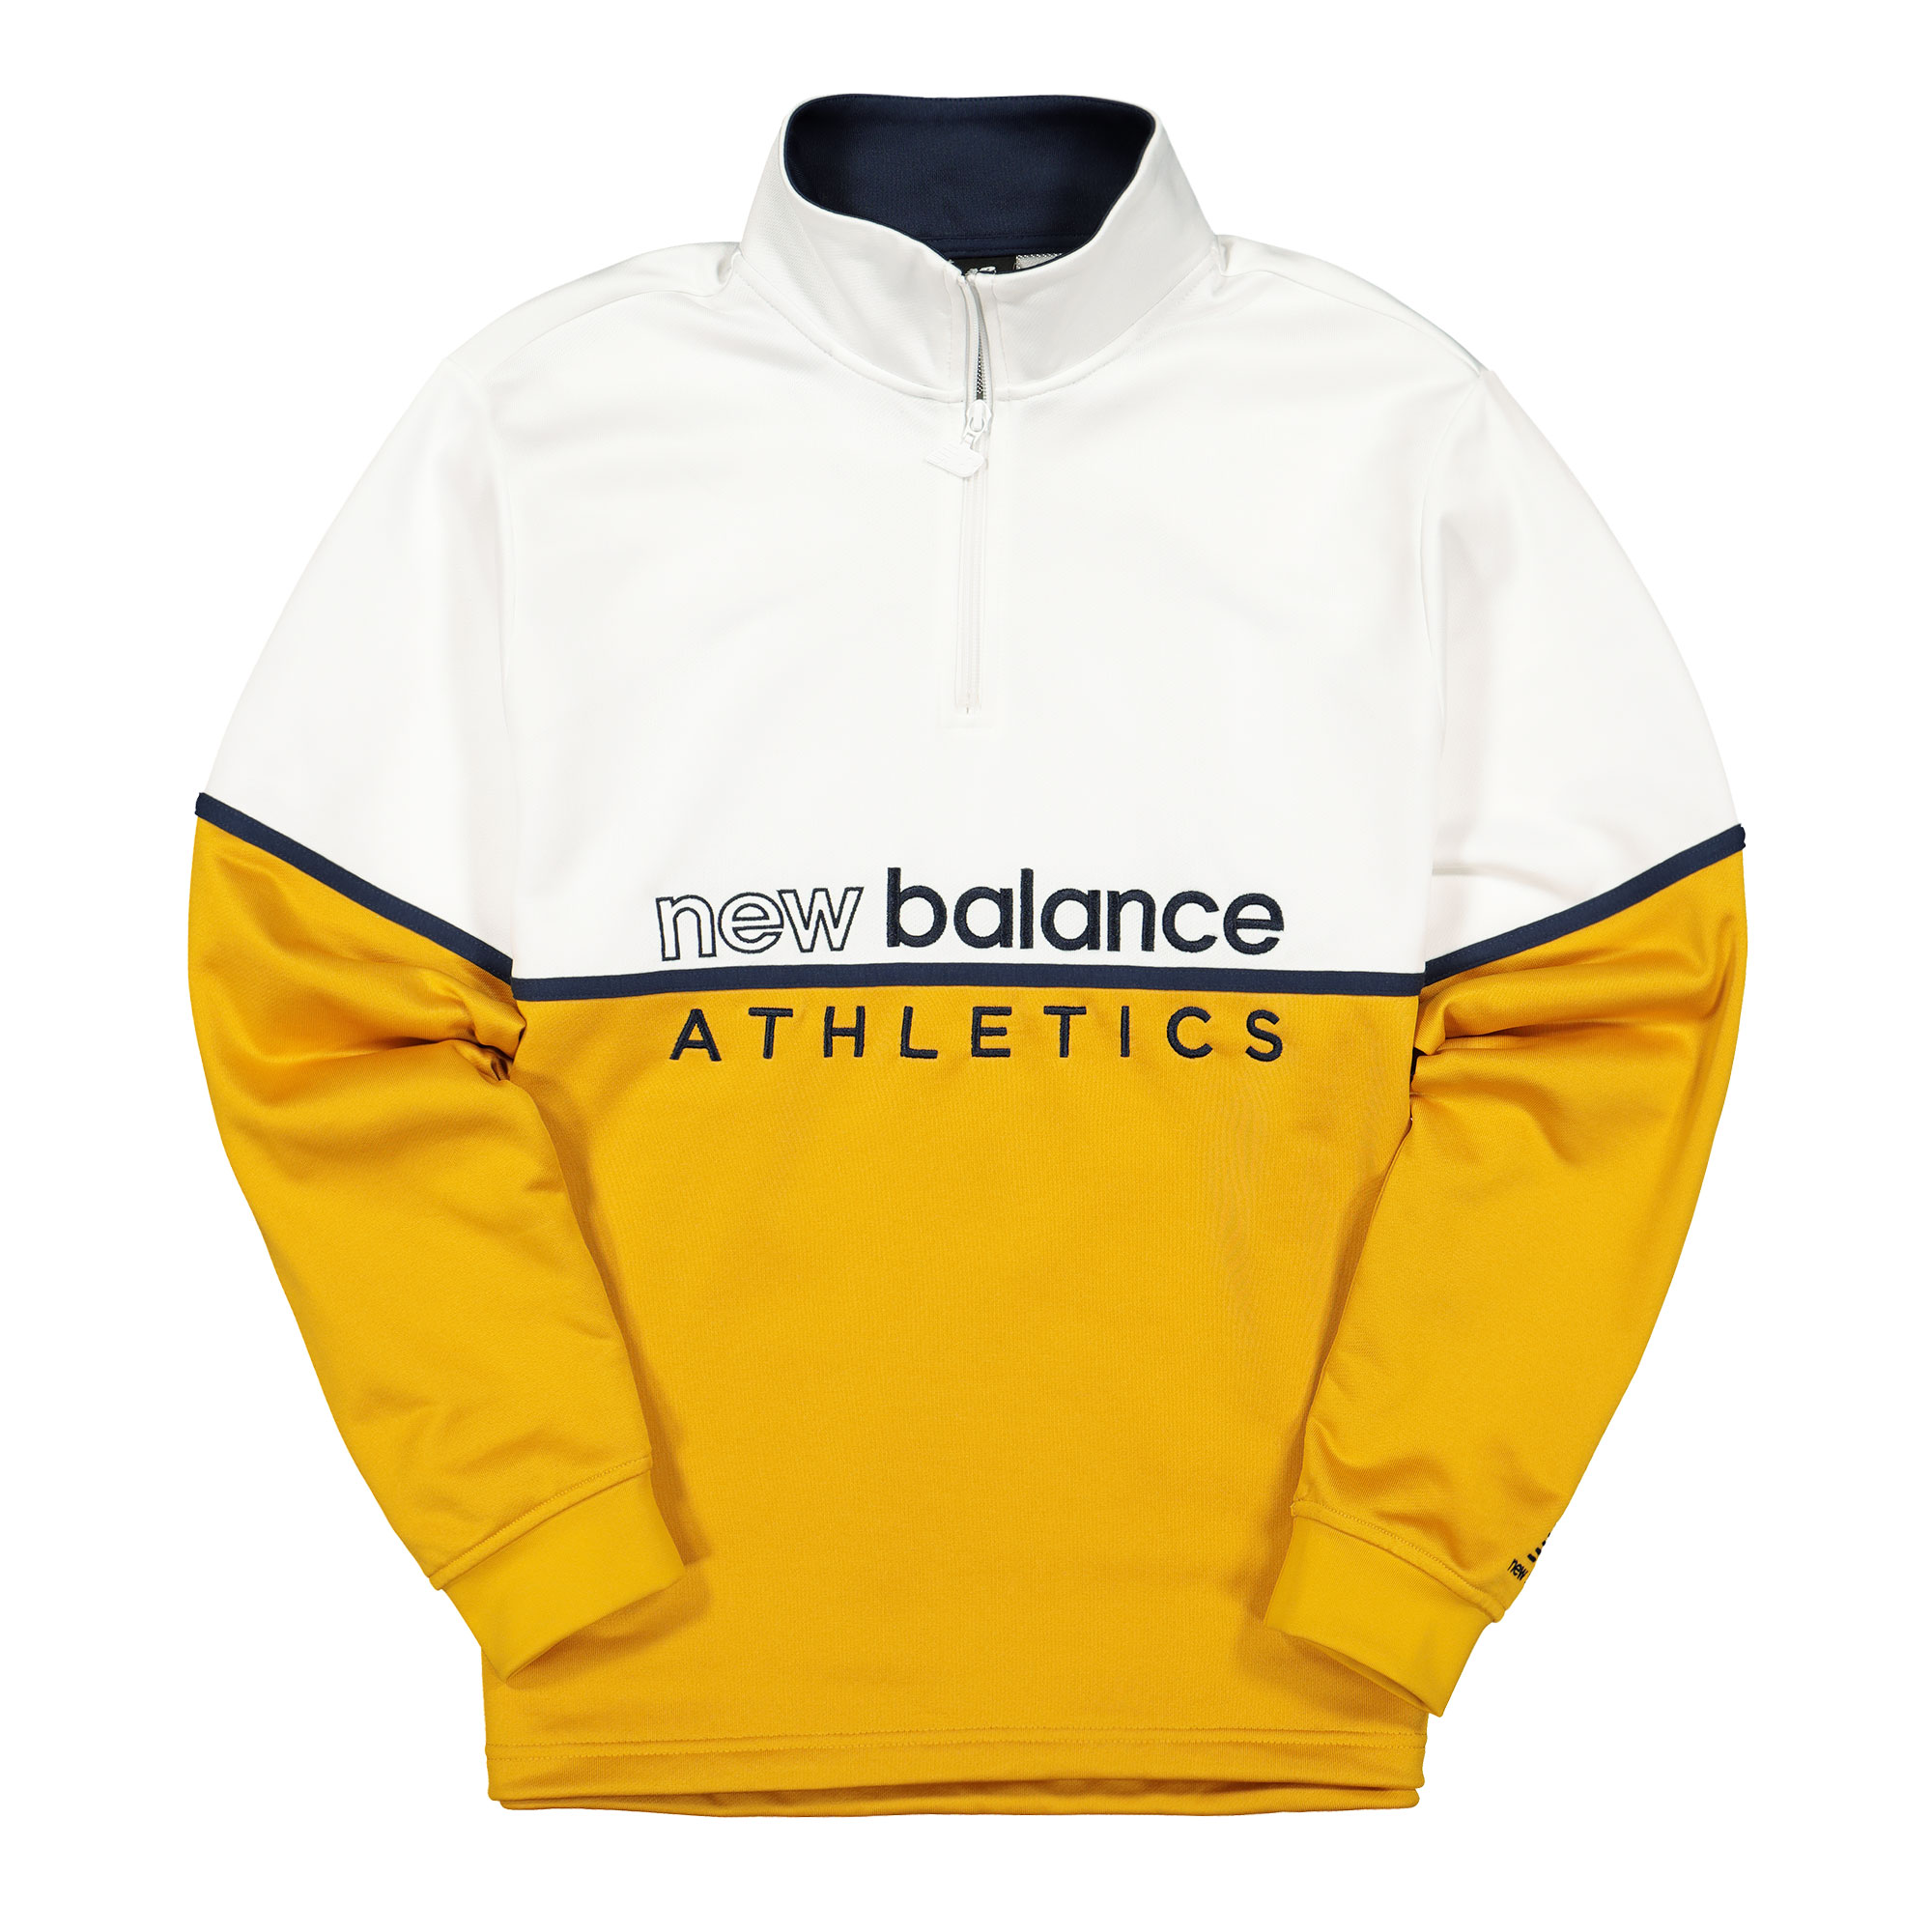 new balance yellow jacket